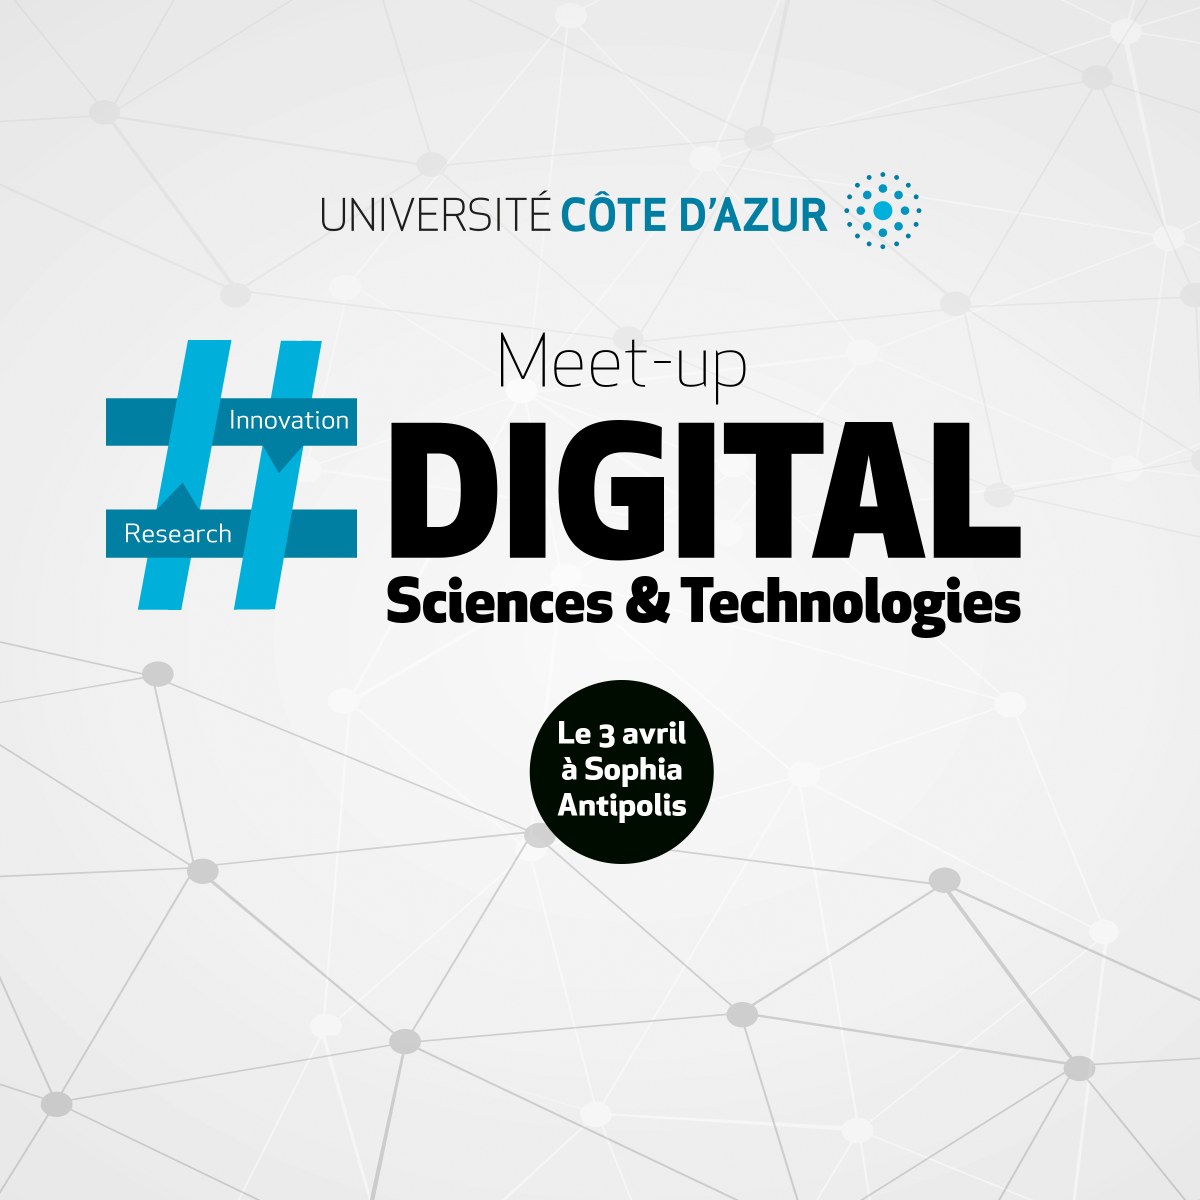 Digital Sciences & Technologies Meetup